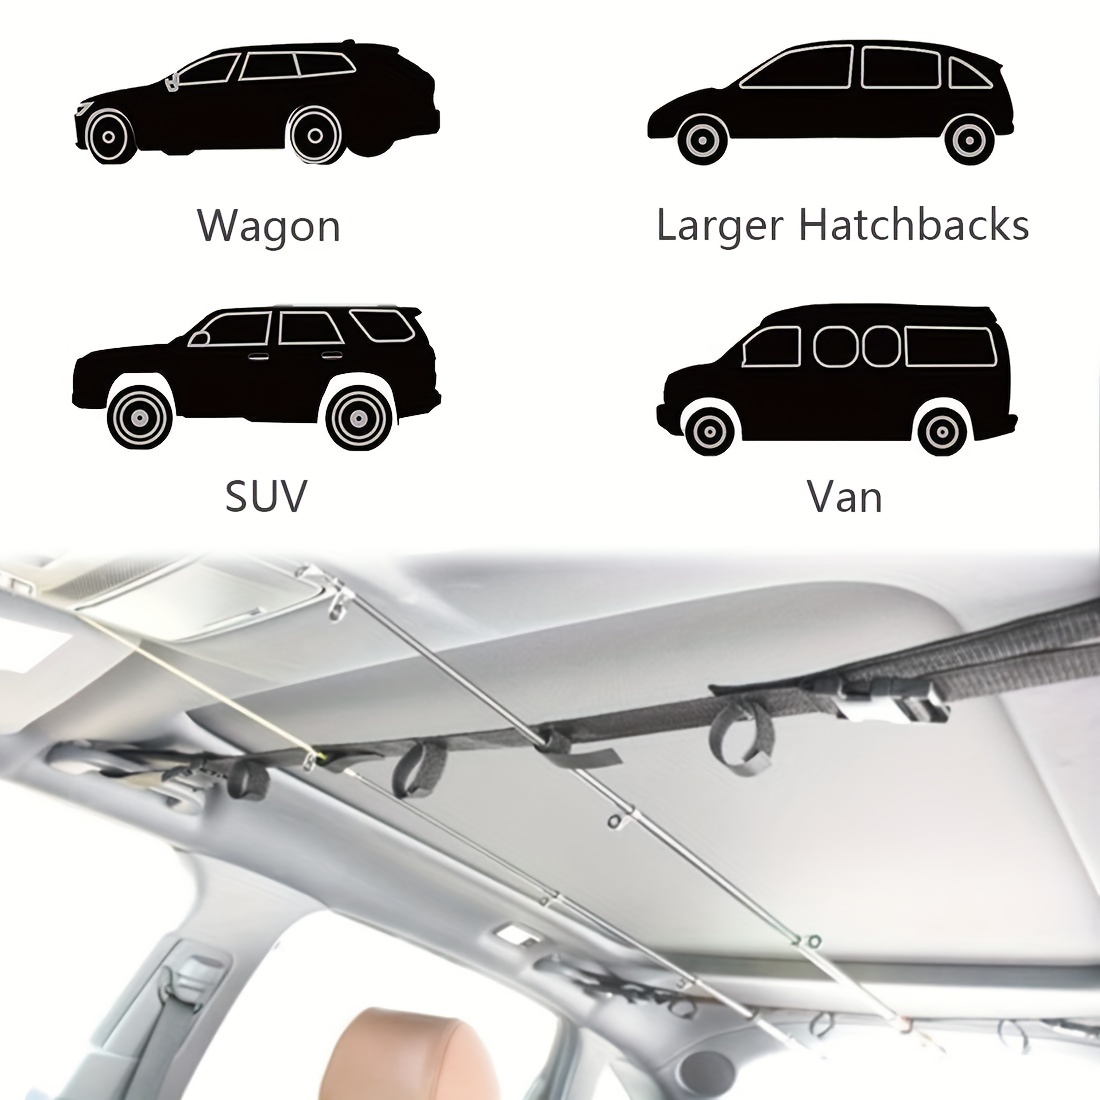 Car Fishing Pole Holder Strap, Portable Fishing Vehicle Rod Storage Rack  Bracket Carrier System, Adjustable For Truck Suv Wagons Van